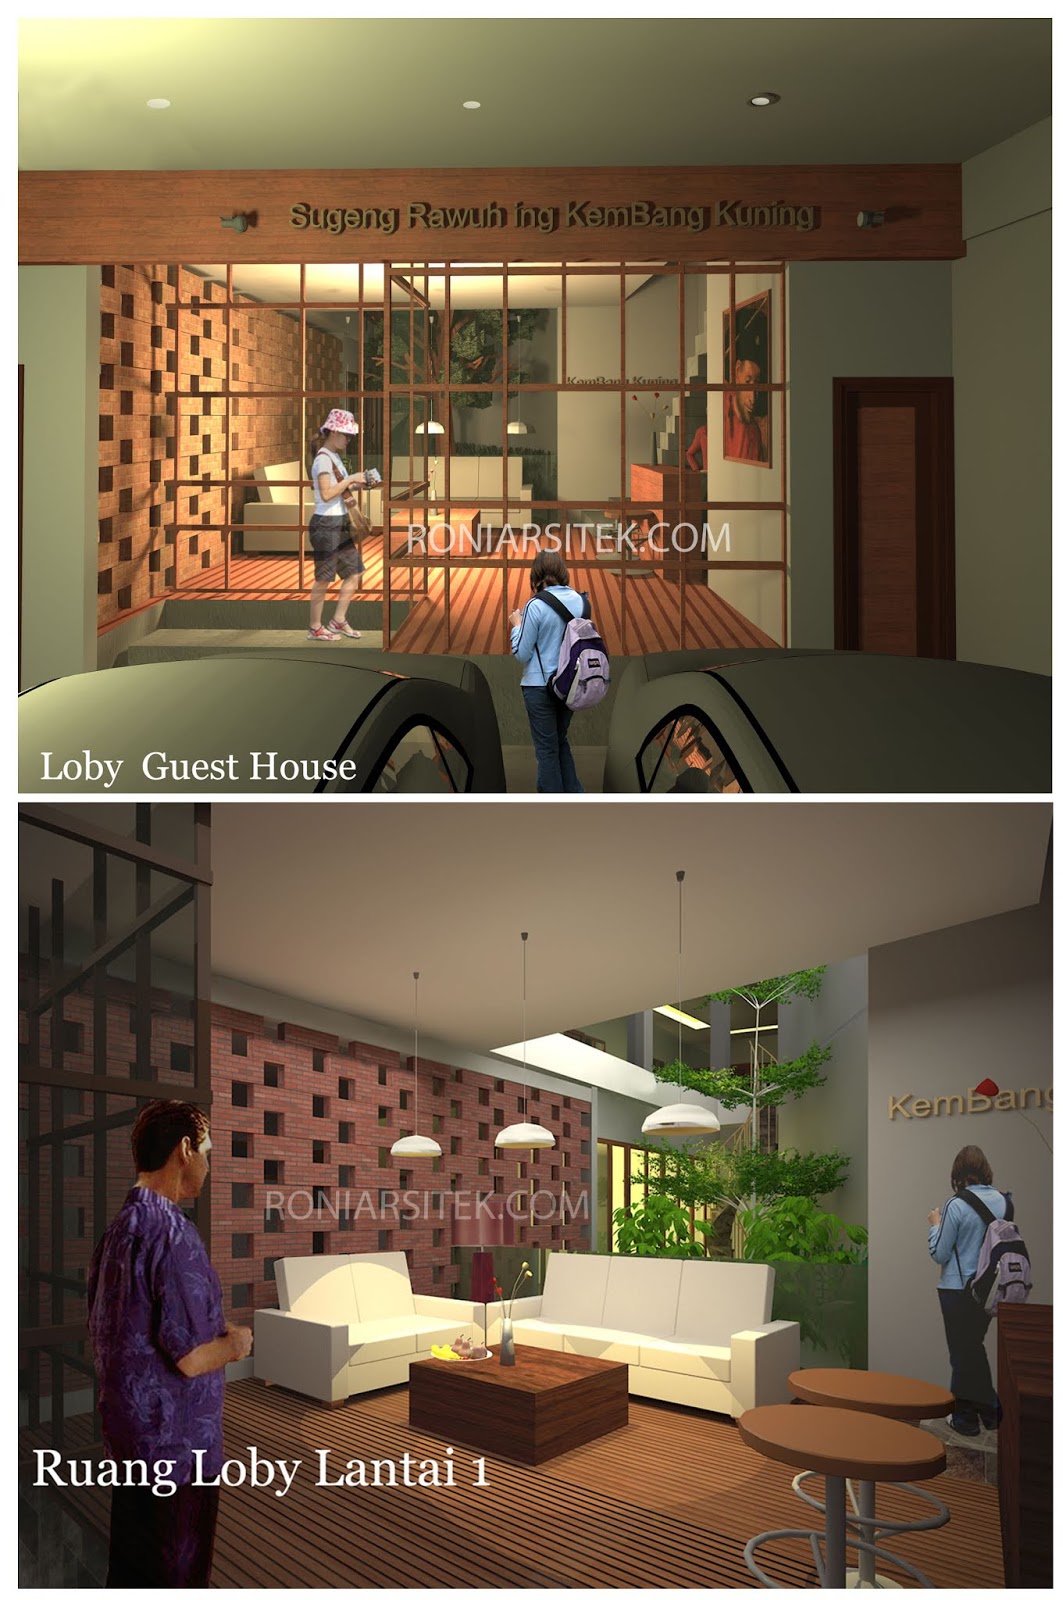 Konsultan Arsitek Surabaya L Desain Arsitektur Dan Interior